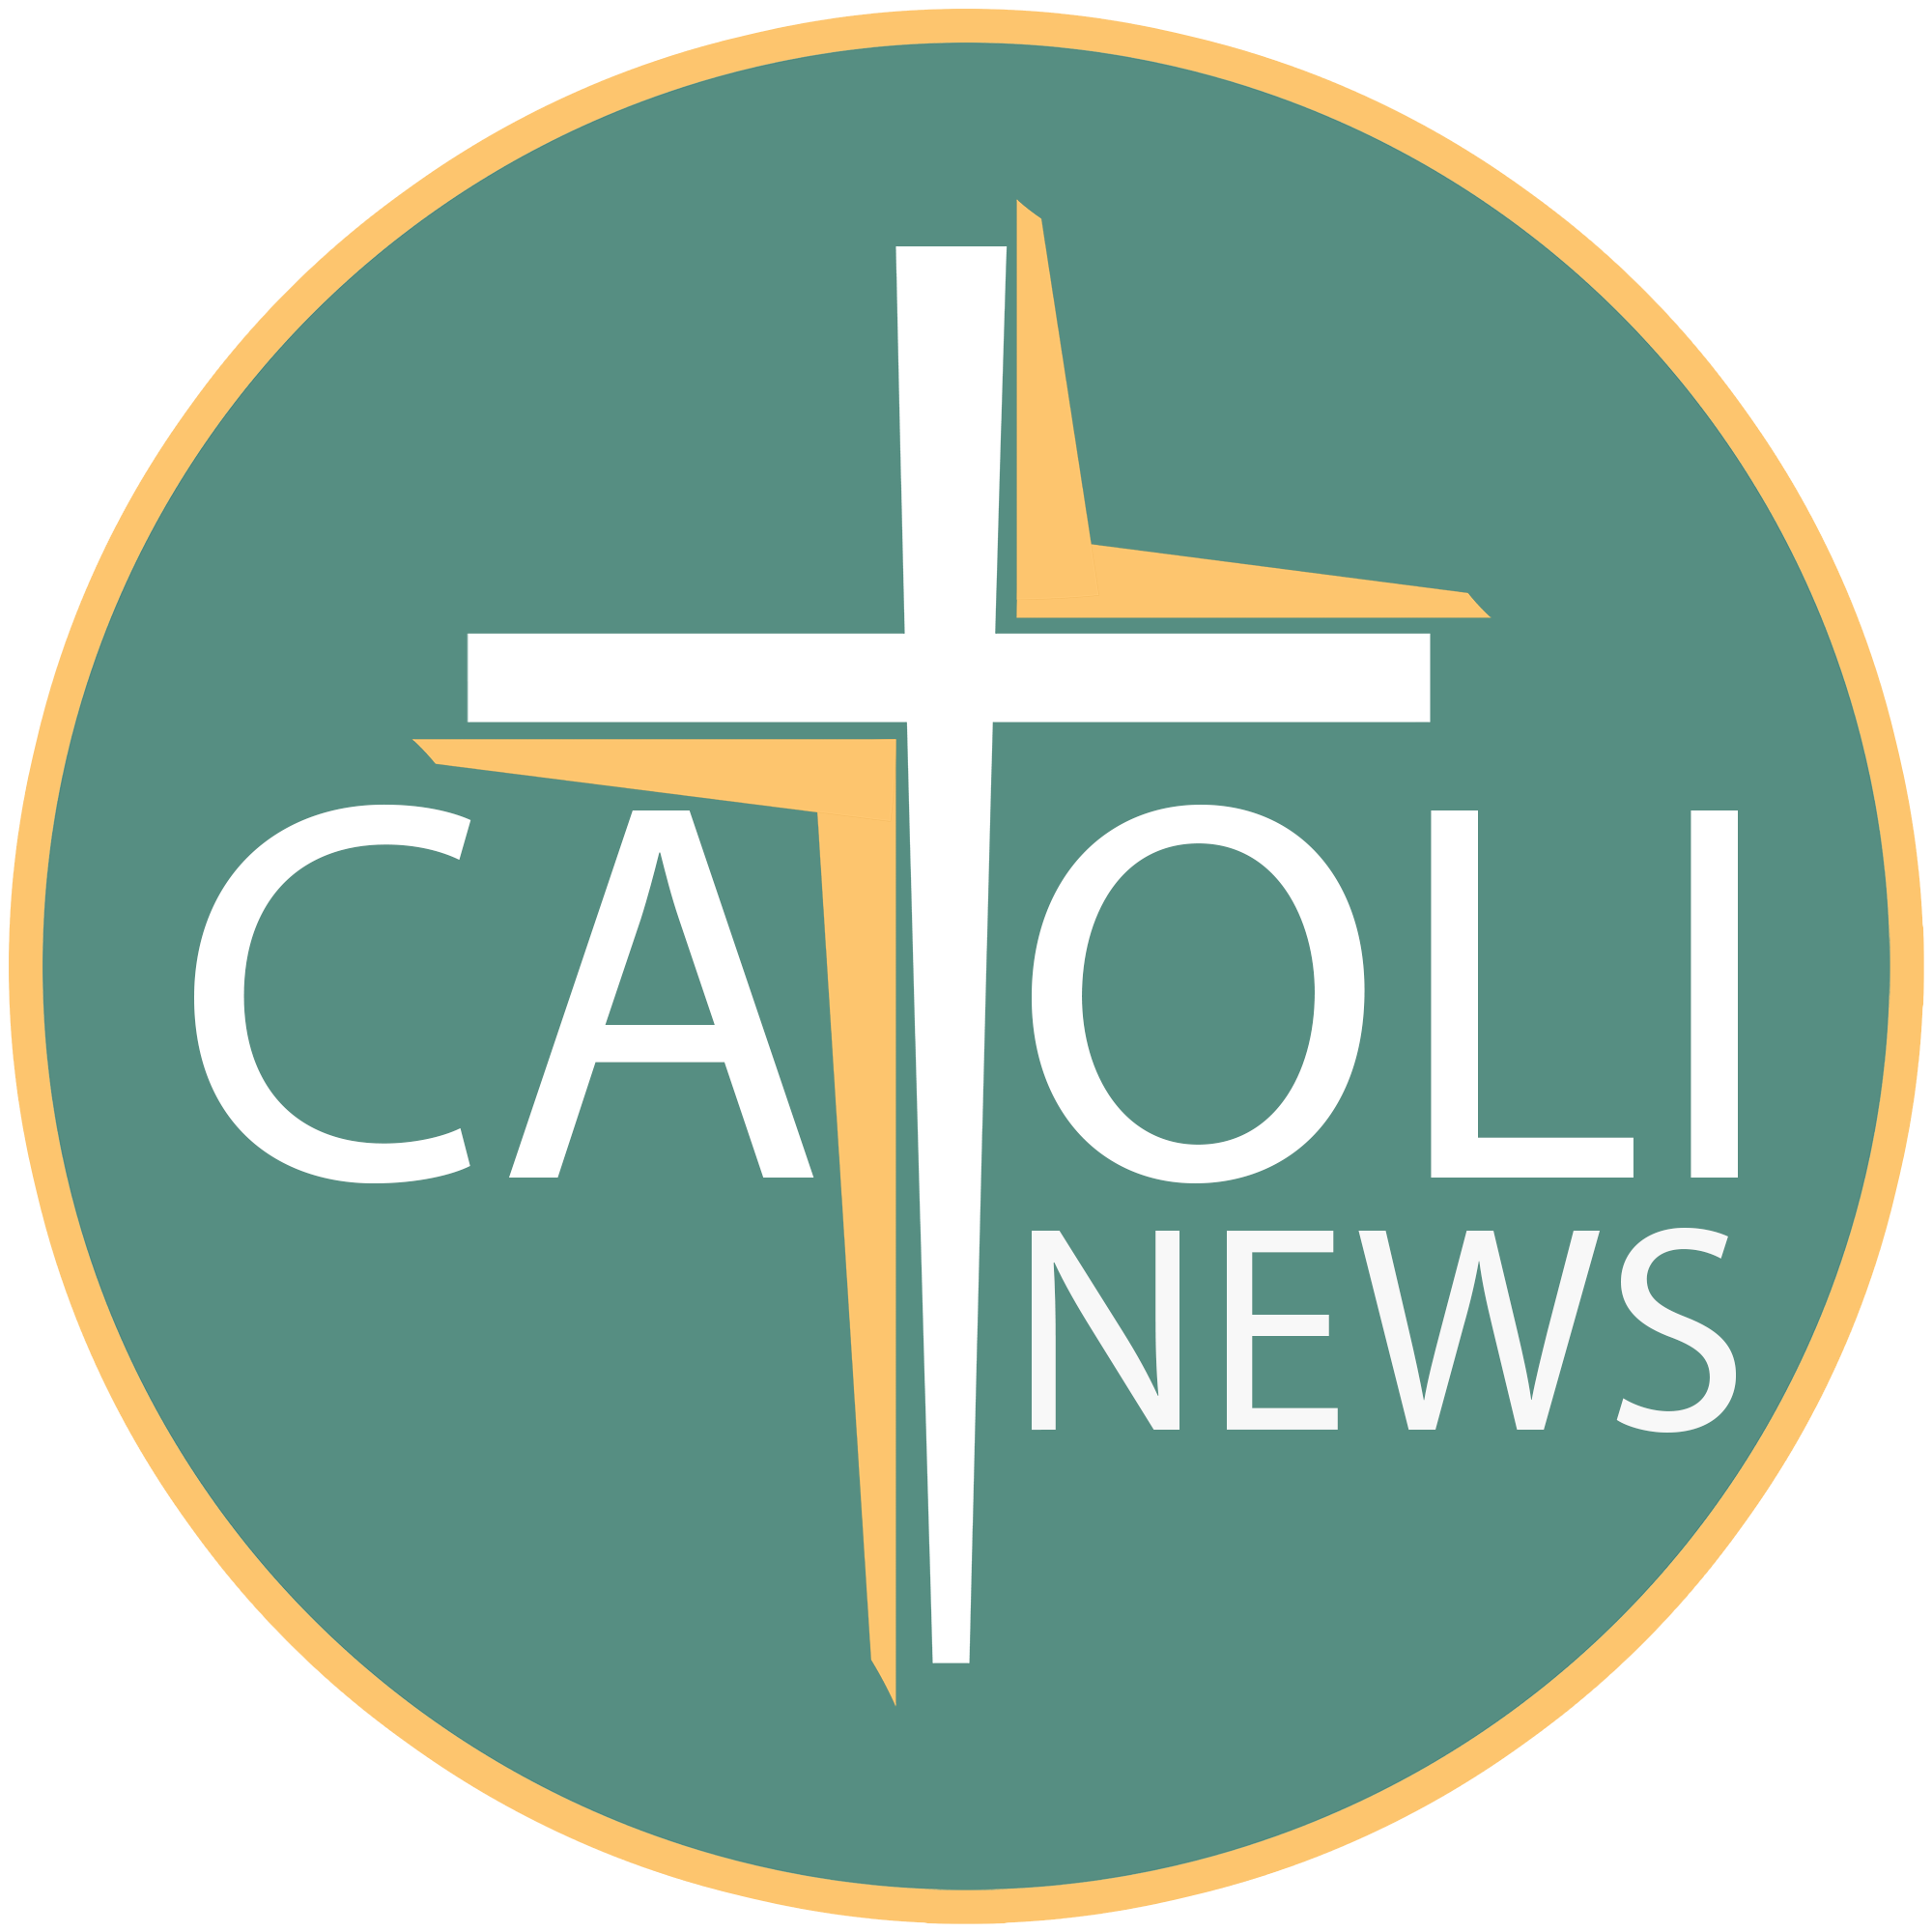 CatoliNews App